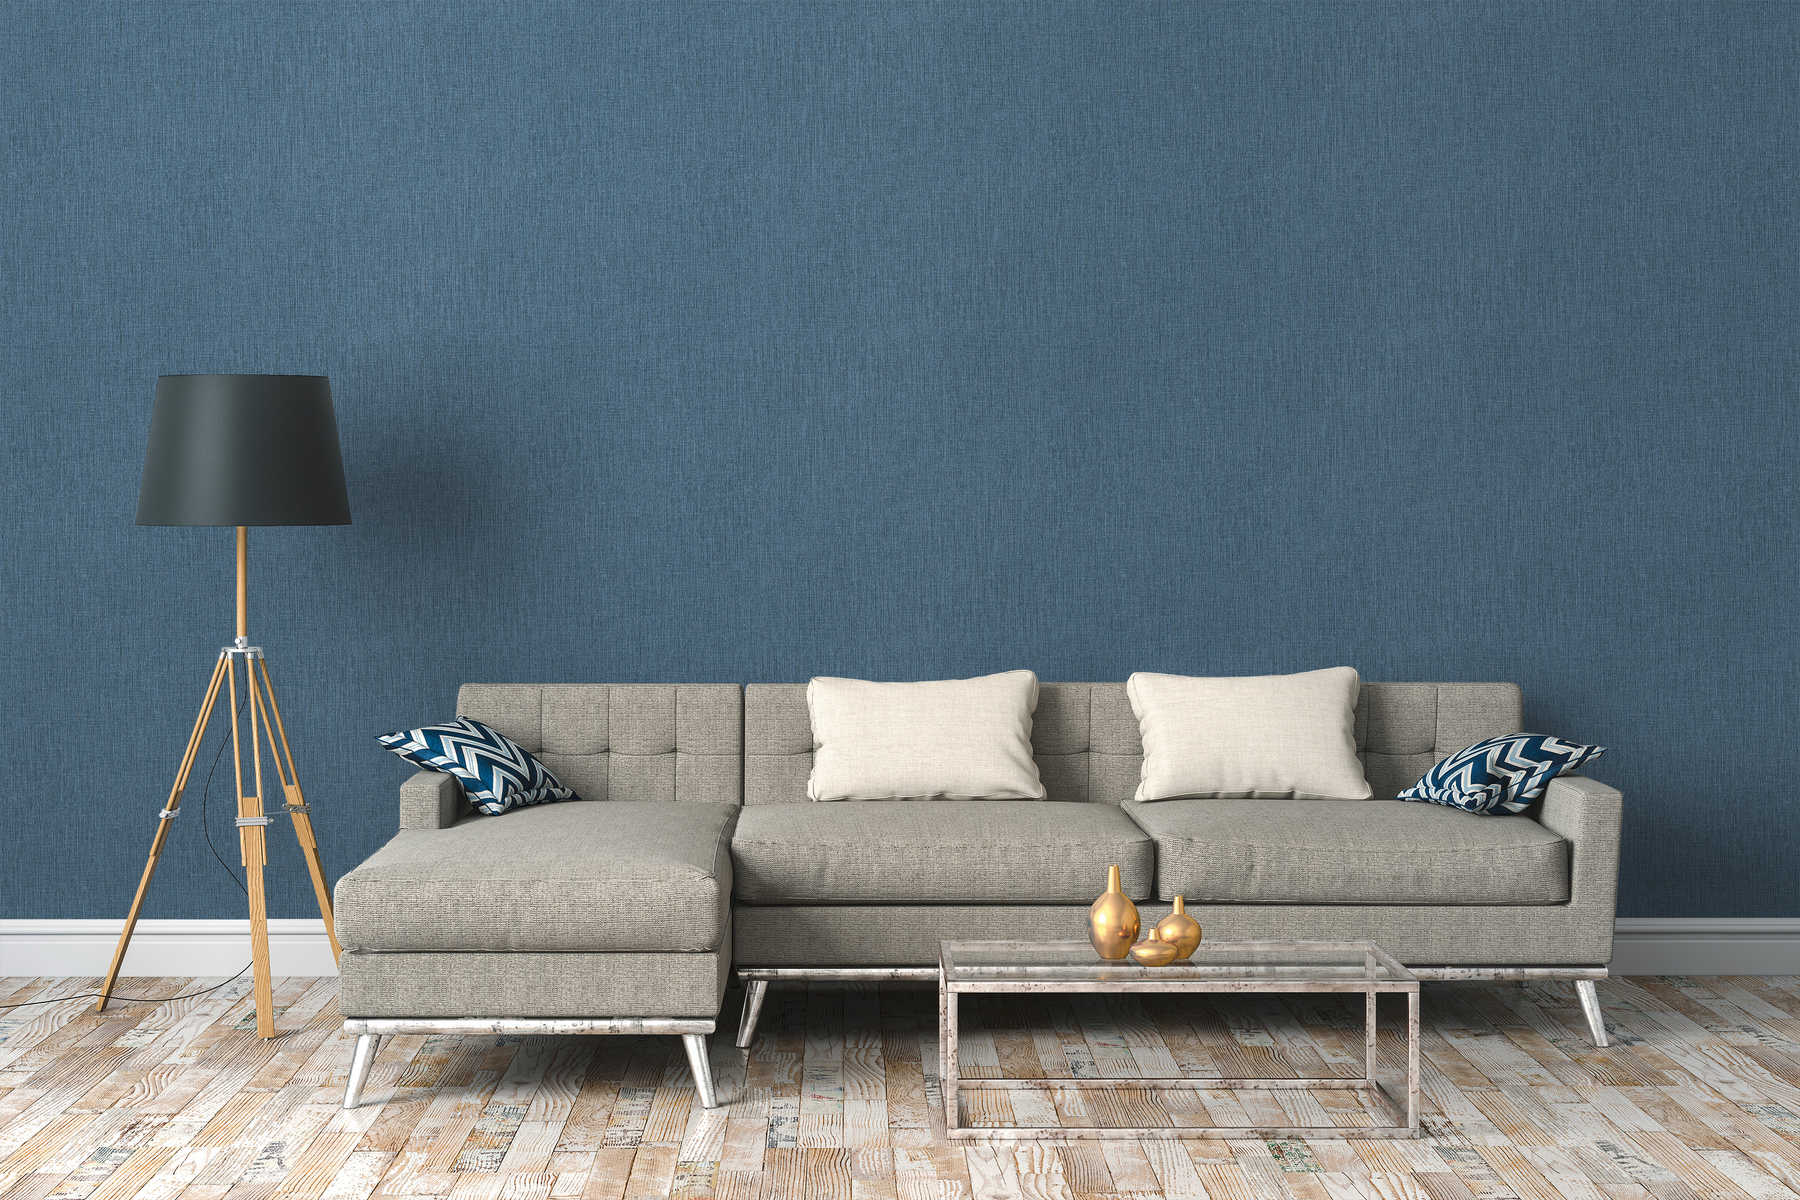             Plain wallpaper with tone-on-tone pattern - beige, cream, white
        